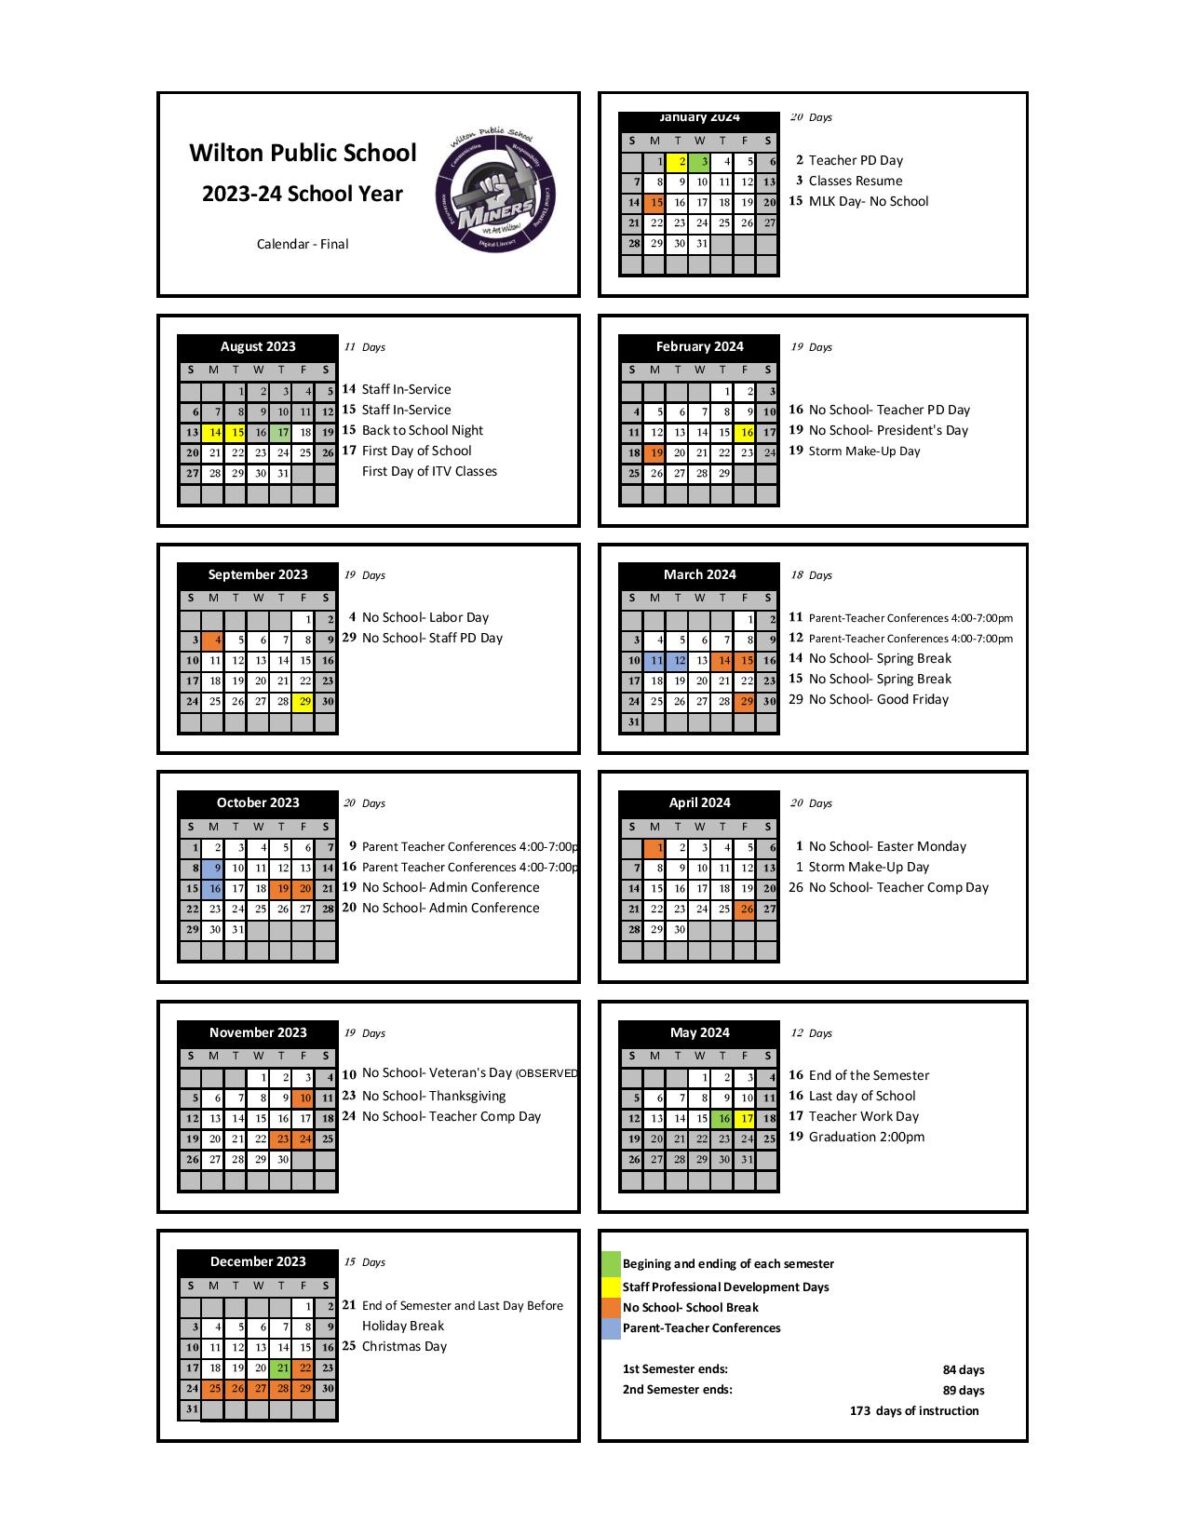 Wilton Public Schools Calendar 2024 in PDF